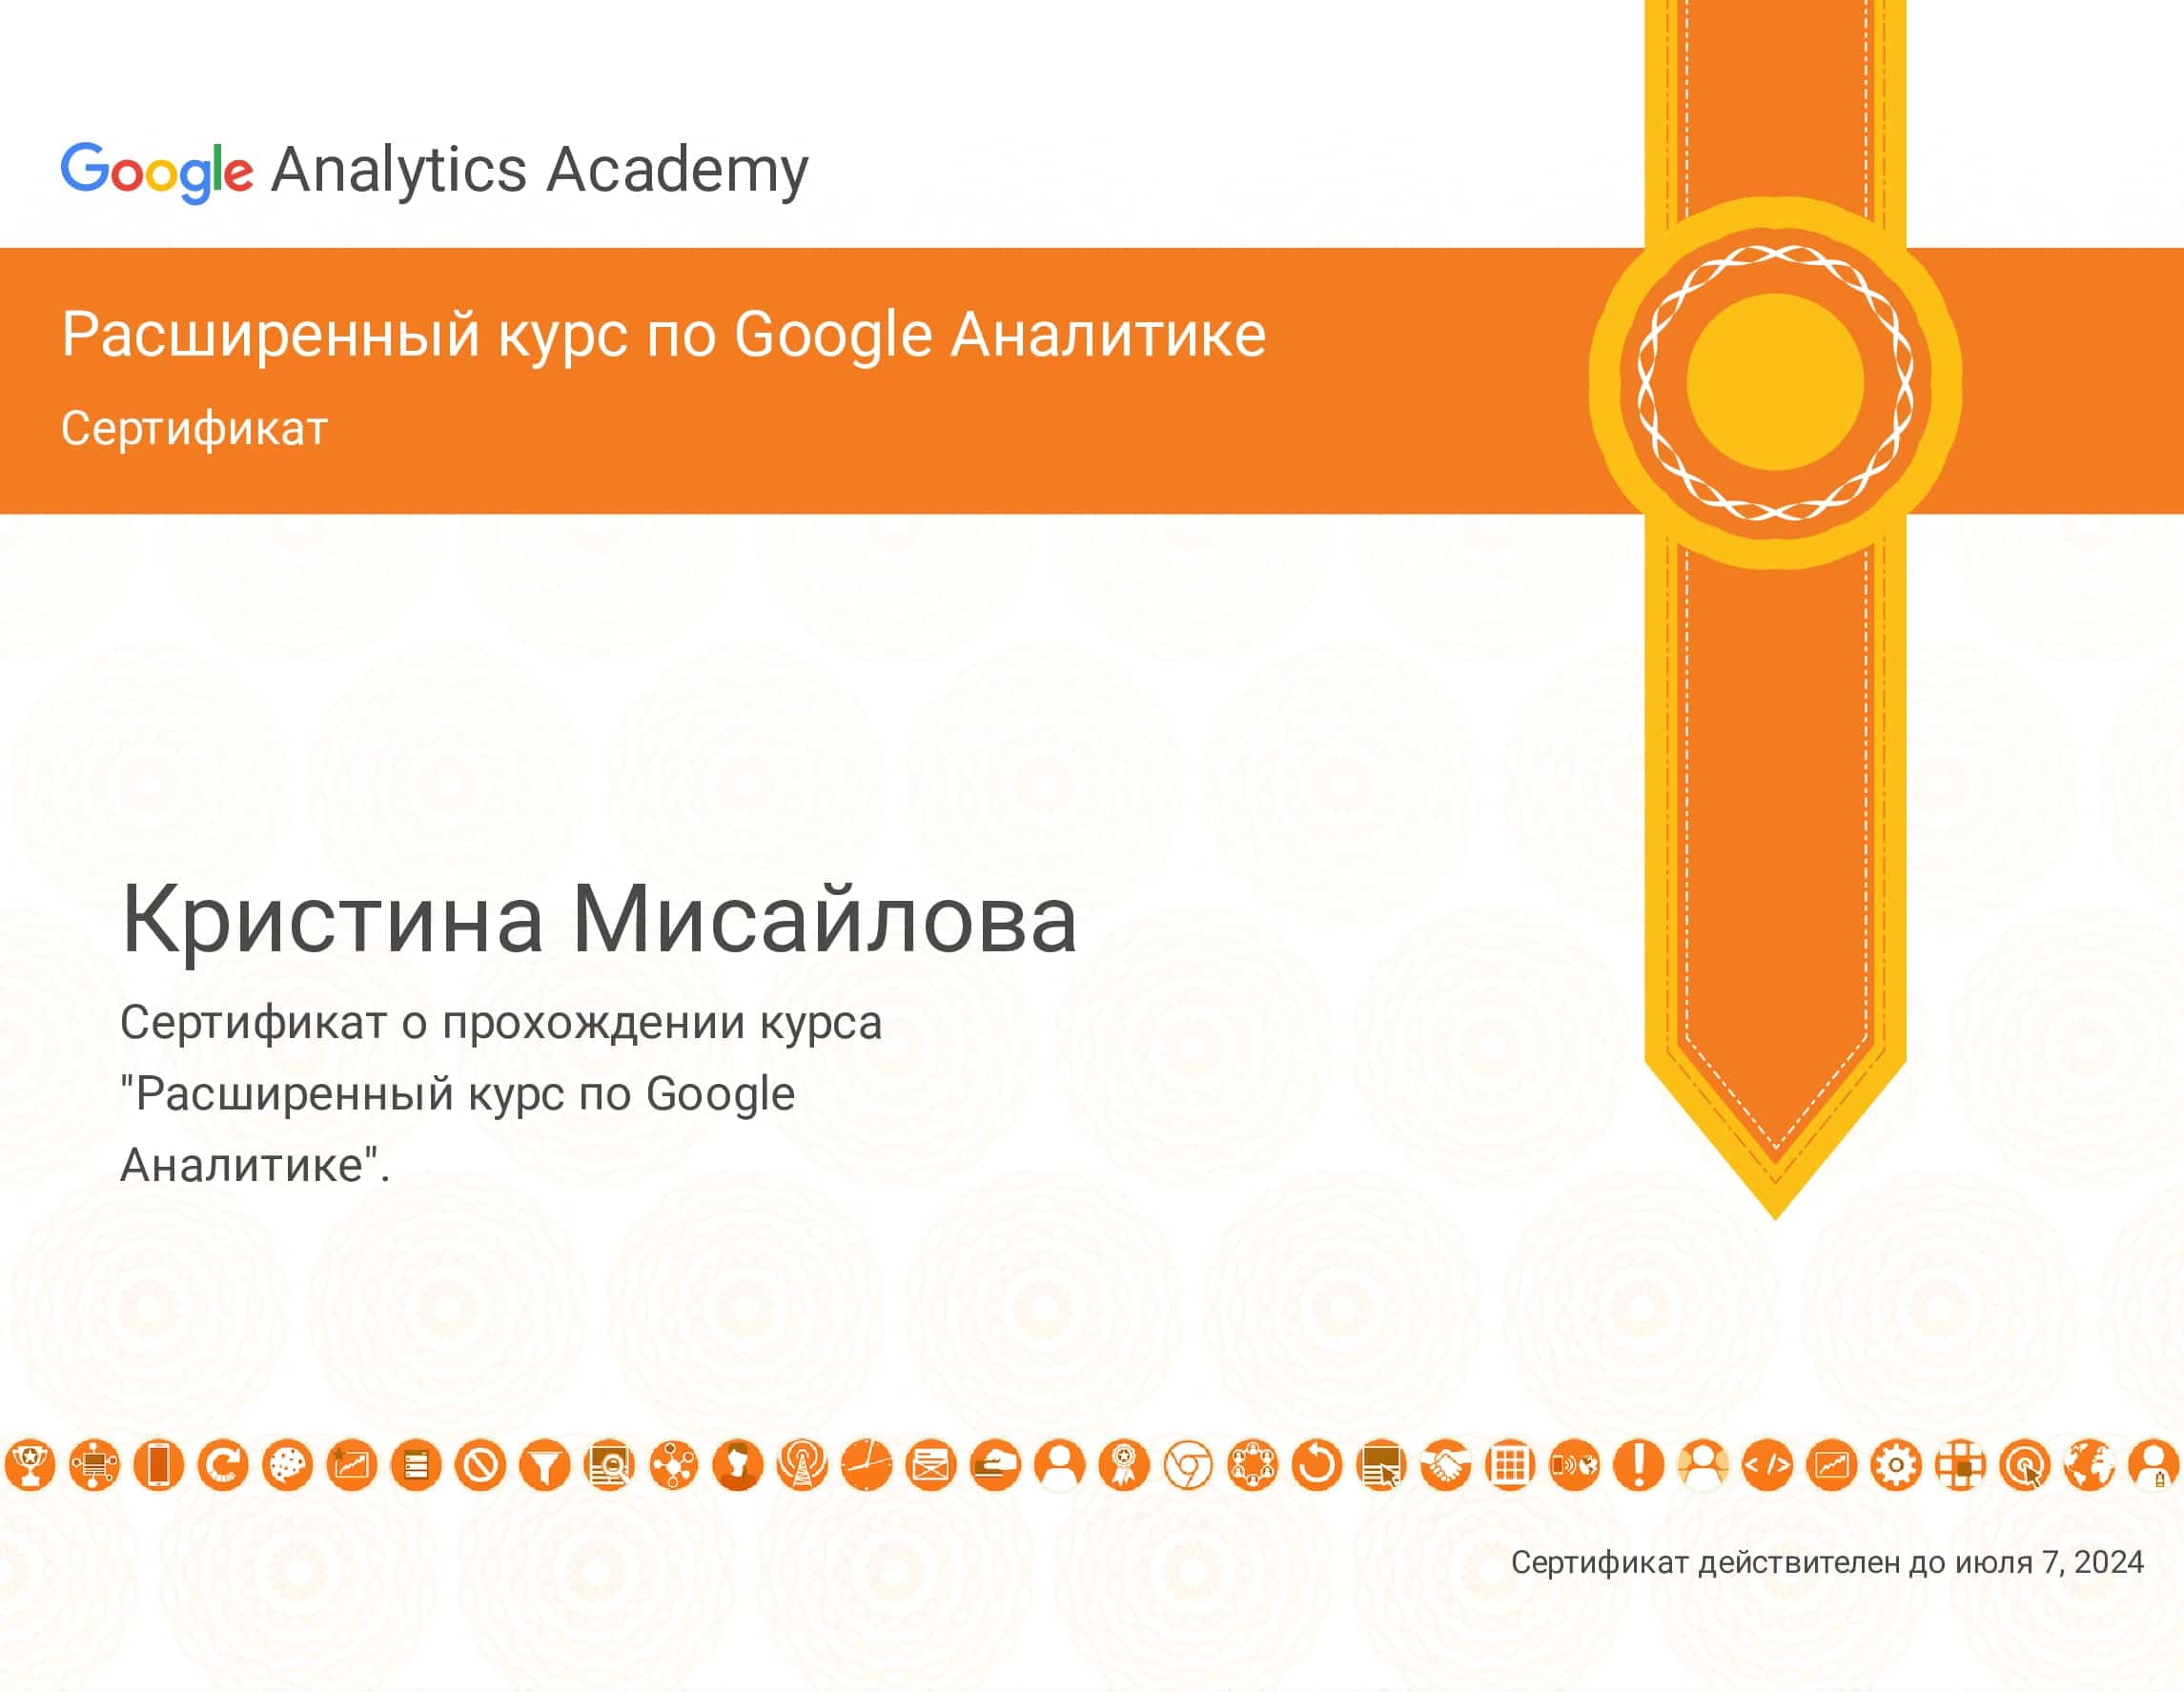 Мисайлова Кристина - сертификат